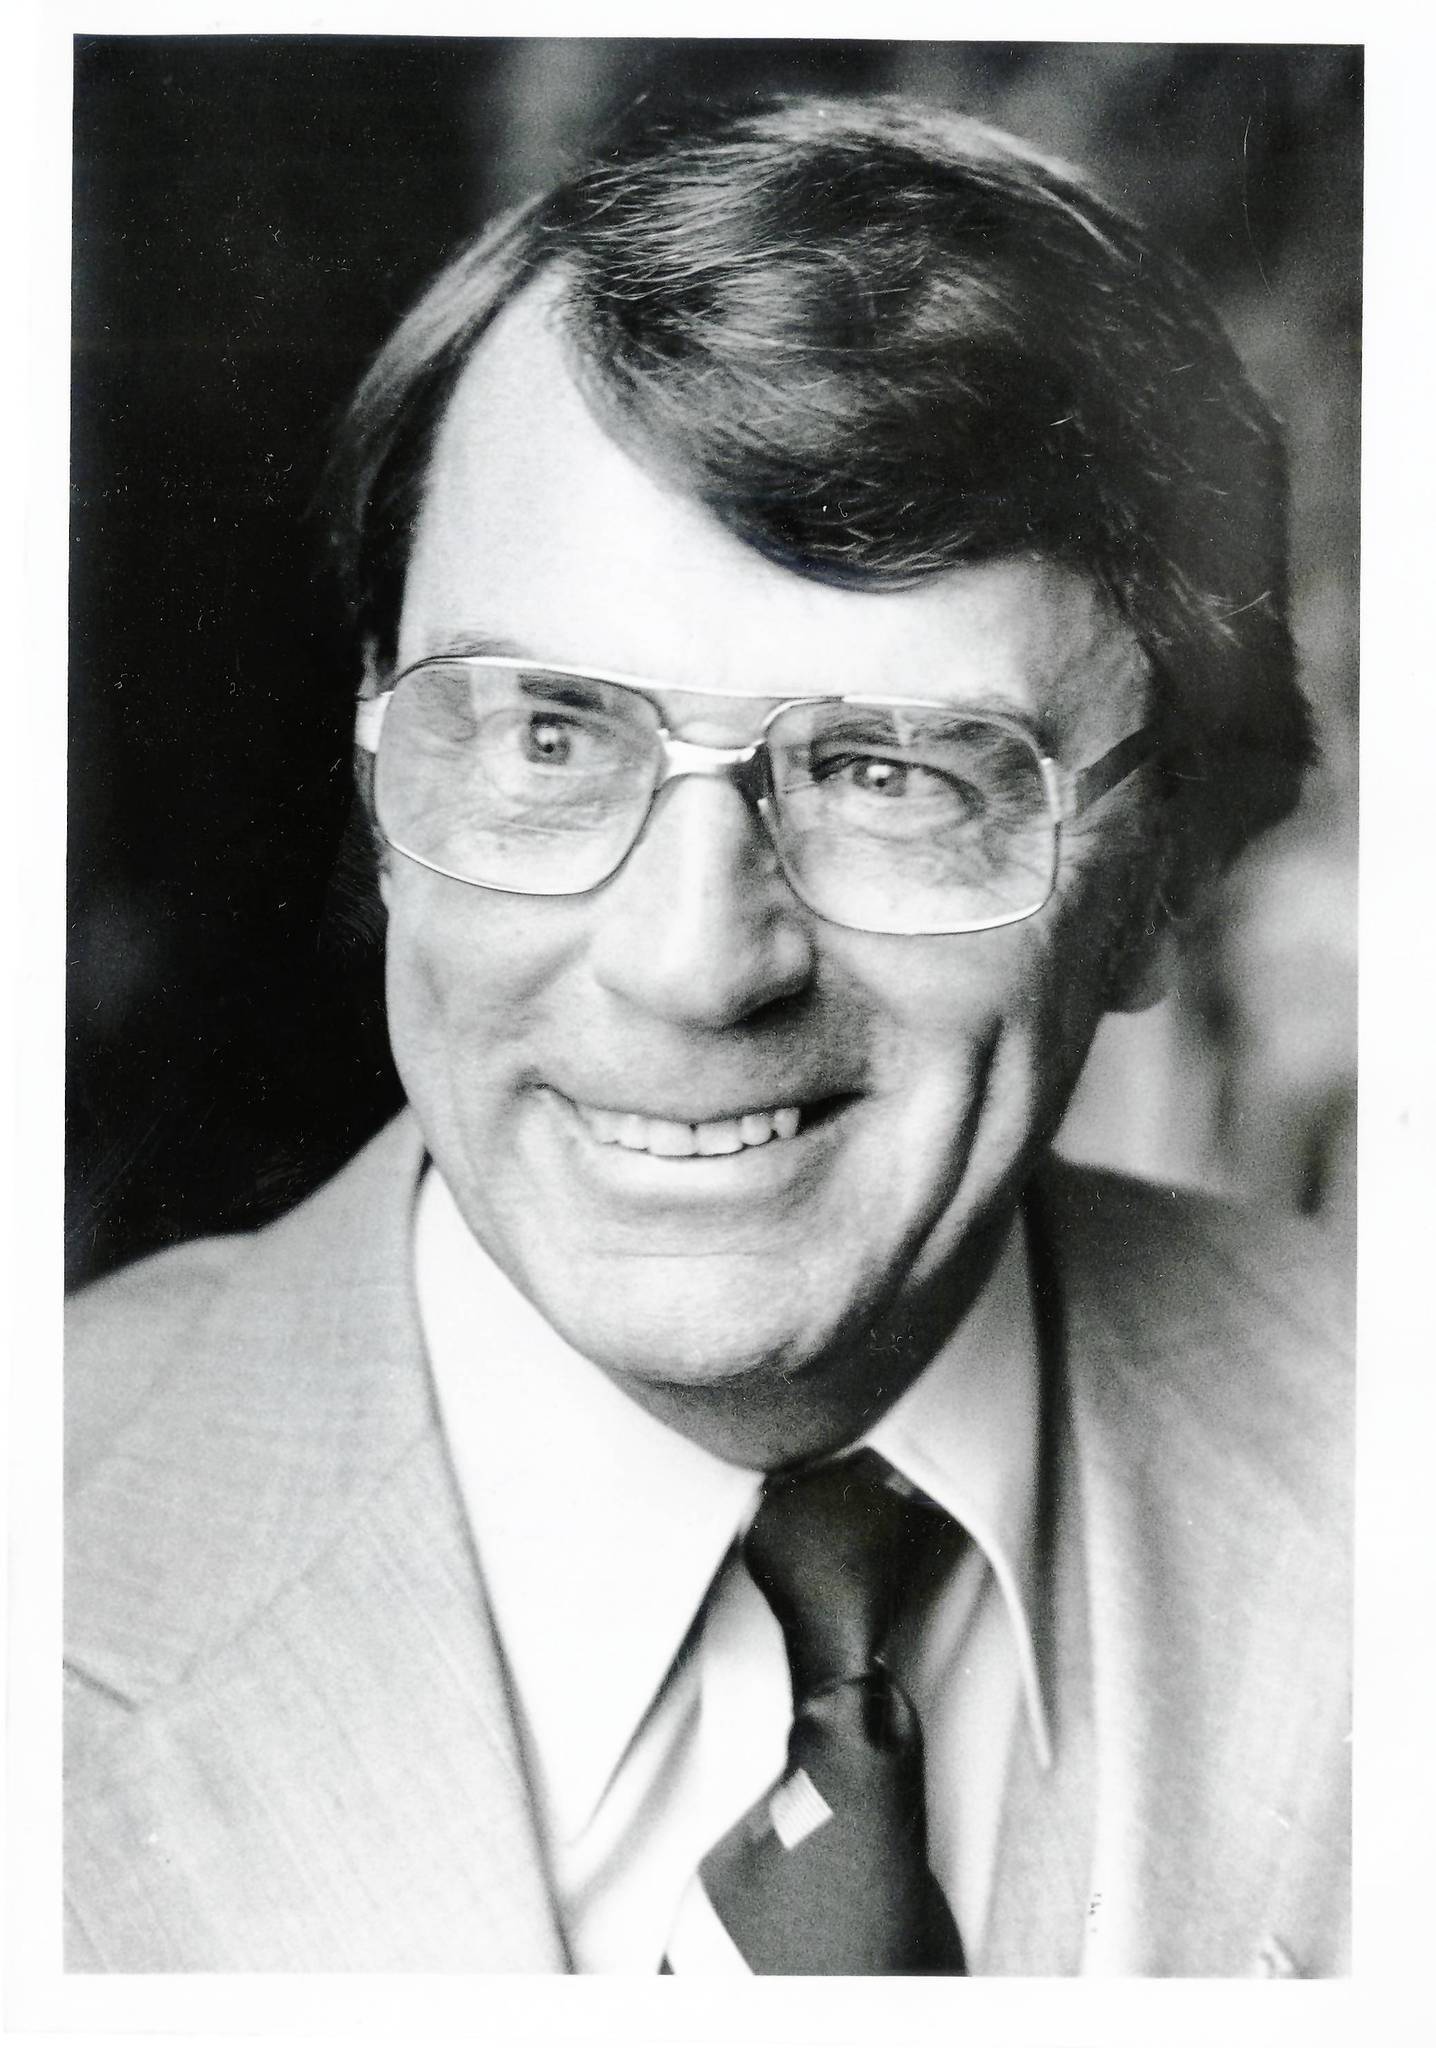 Henry A. 'Hank' Johnson, former CEO of Spiegel, 1919-2013 - Chicago Tribune